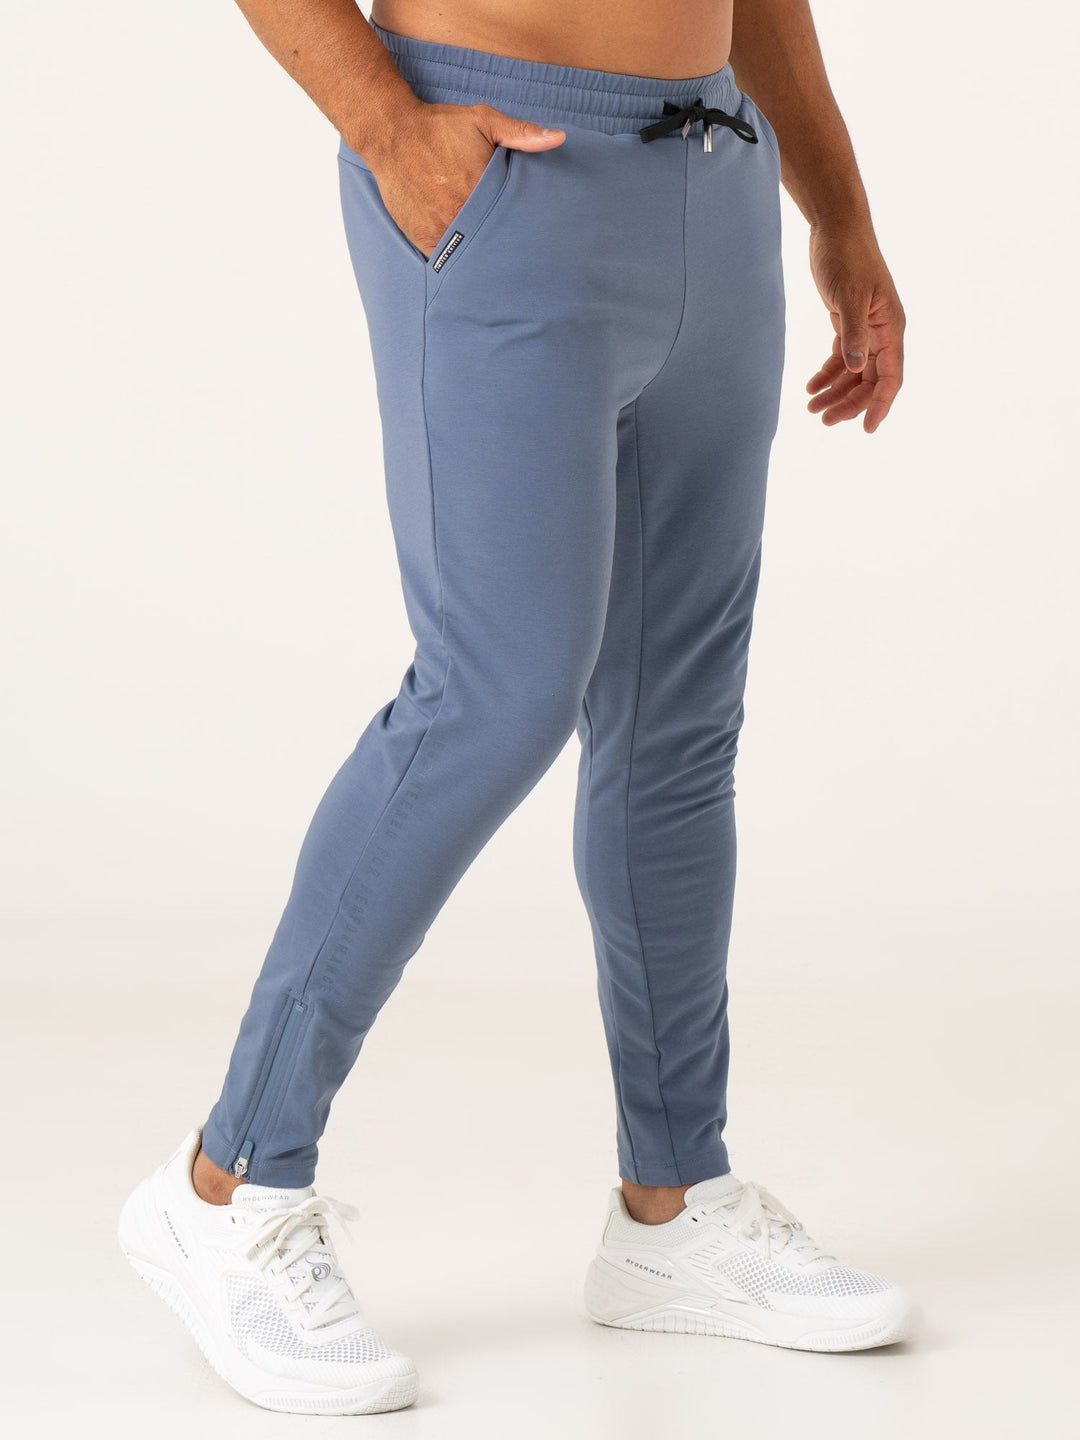 Pursuit Gym Track Pants - Denim Blue Clothing Ryderwear 